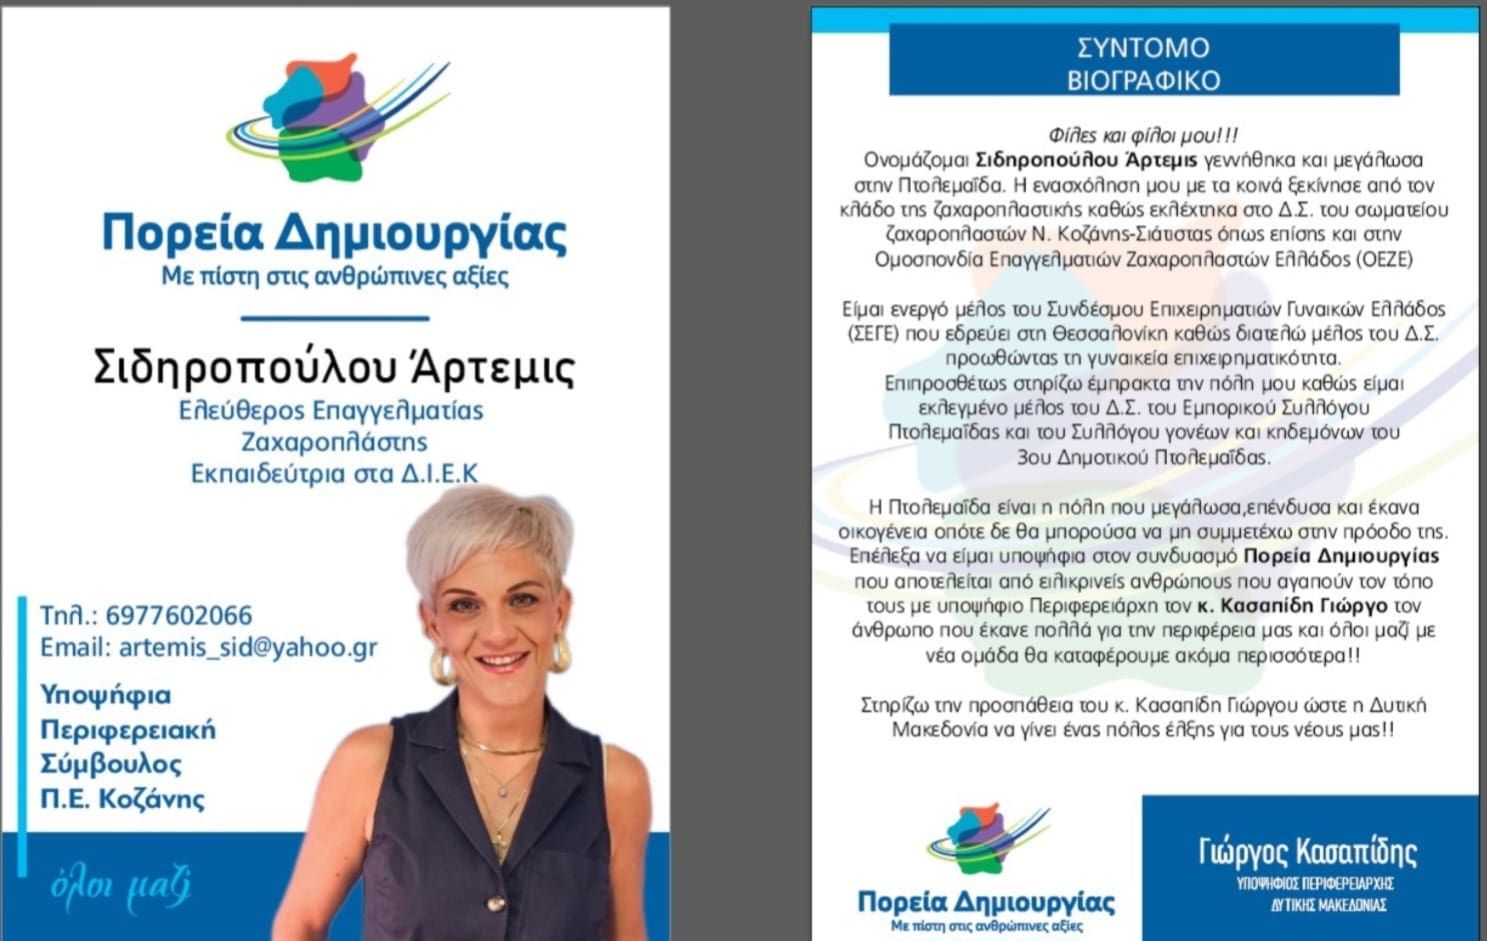 Eordaialive.com - Τα Νέα της Πτολεμαΐδας, Εορδαίας, Κοζάνης H Άρτεμις Σιδηροπούλου υποψήφια με τον Γ. Κασαπίδη